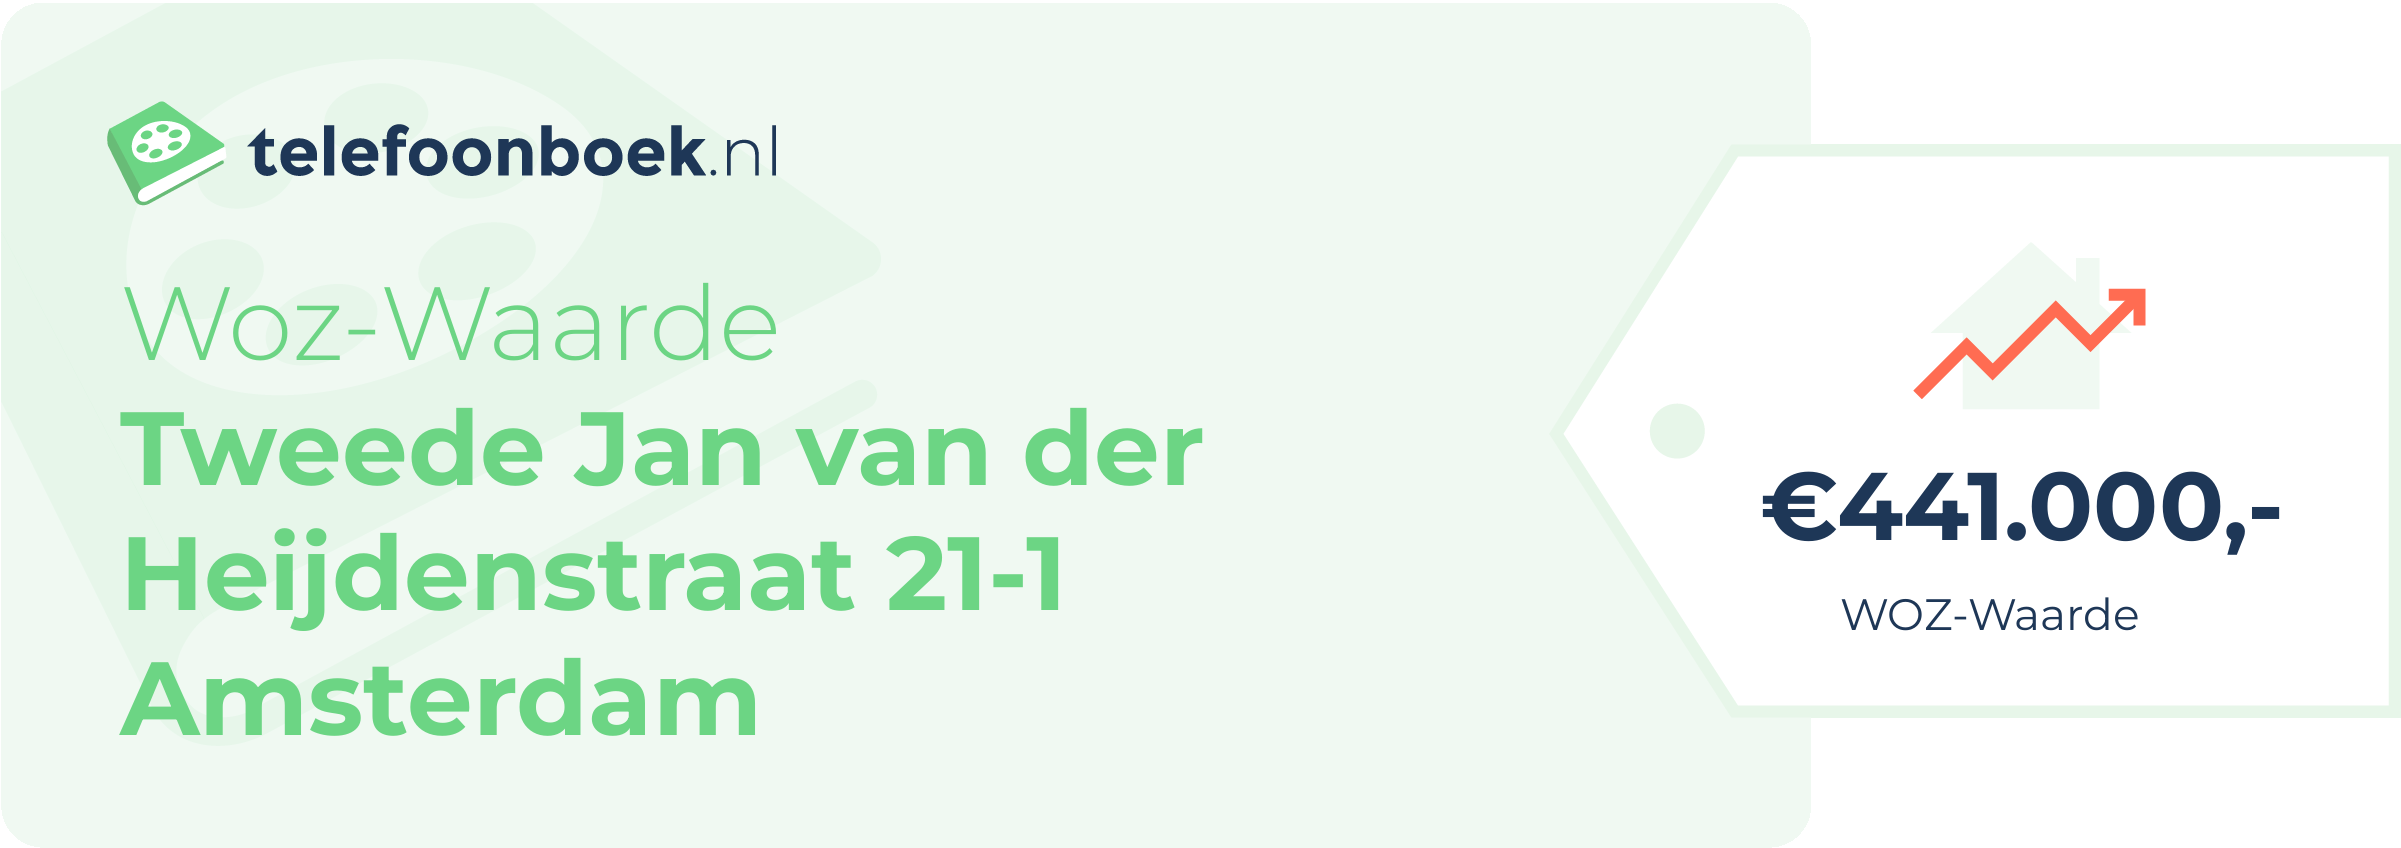 WOZ-waarde Tweede Jan Van Der Heijdenstraat 21-1 Amsterdam